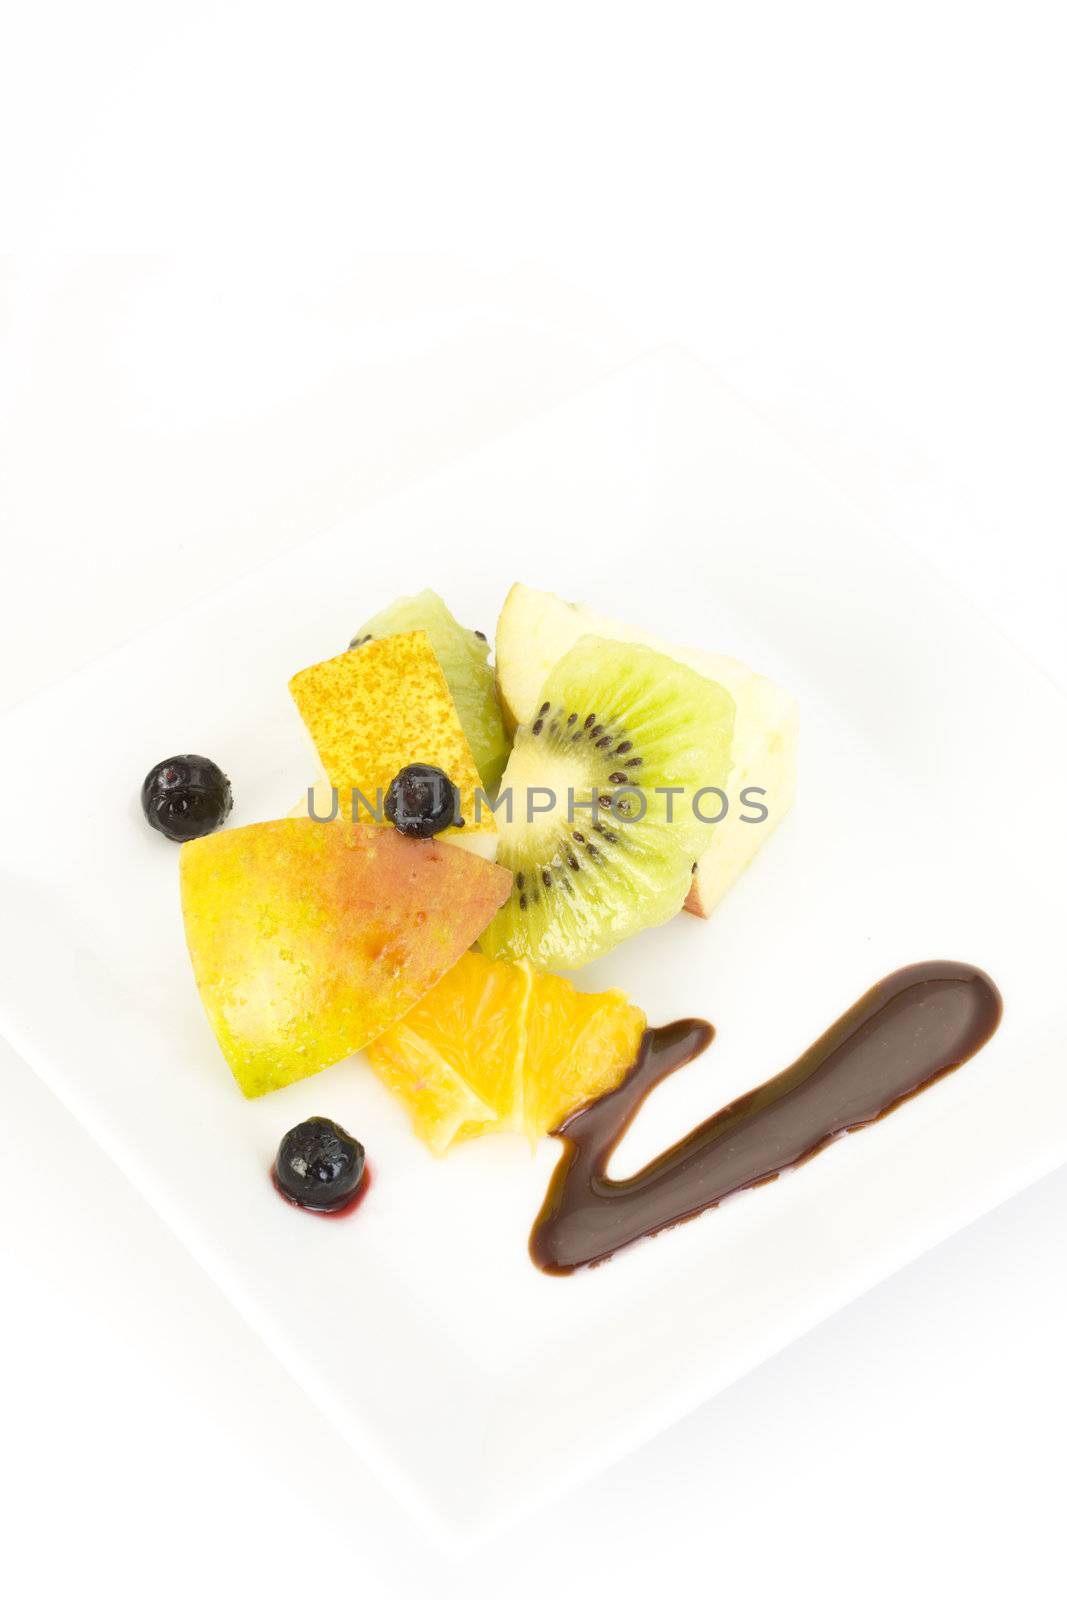 fruit salad composed of kiwi, orange, apple, lime and lemon slices by bernjuer